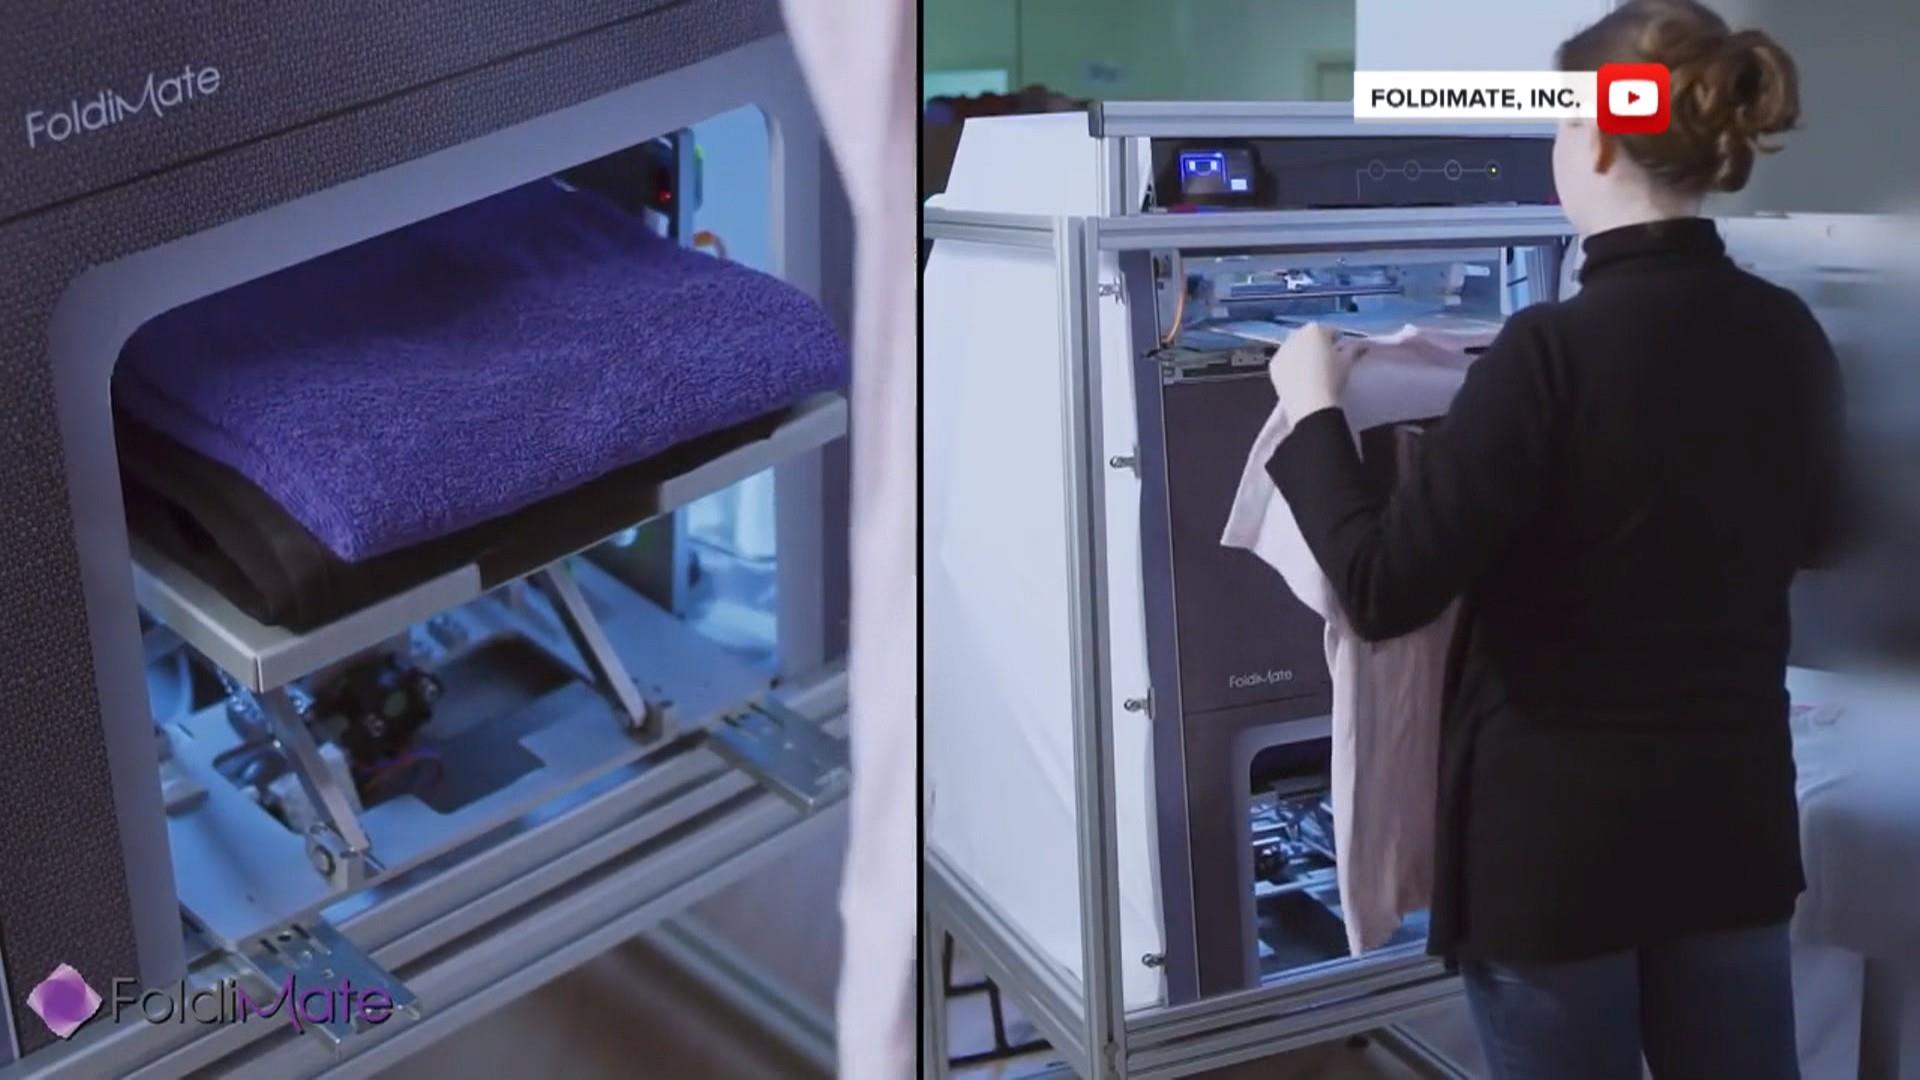 The robot that can fold washing: FoldiMate